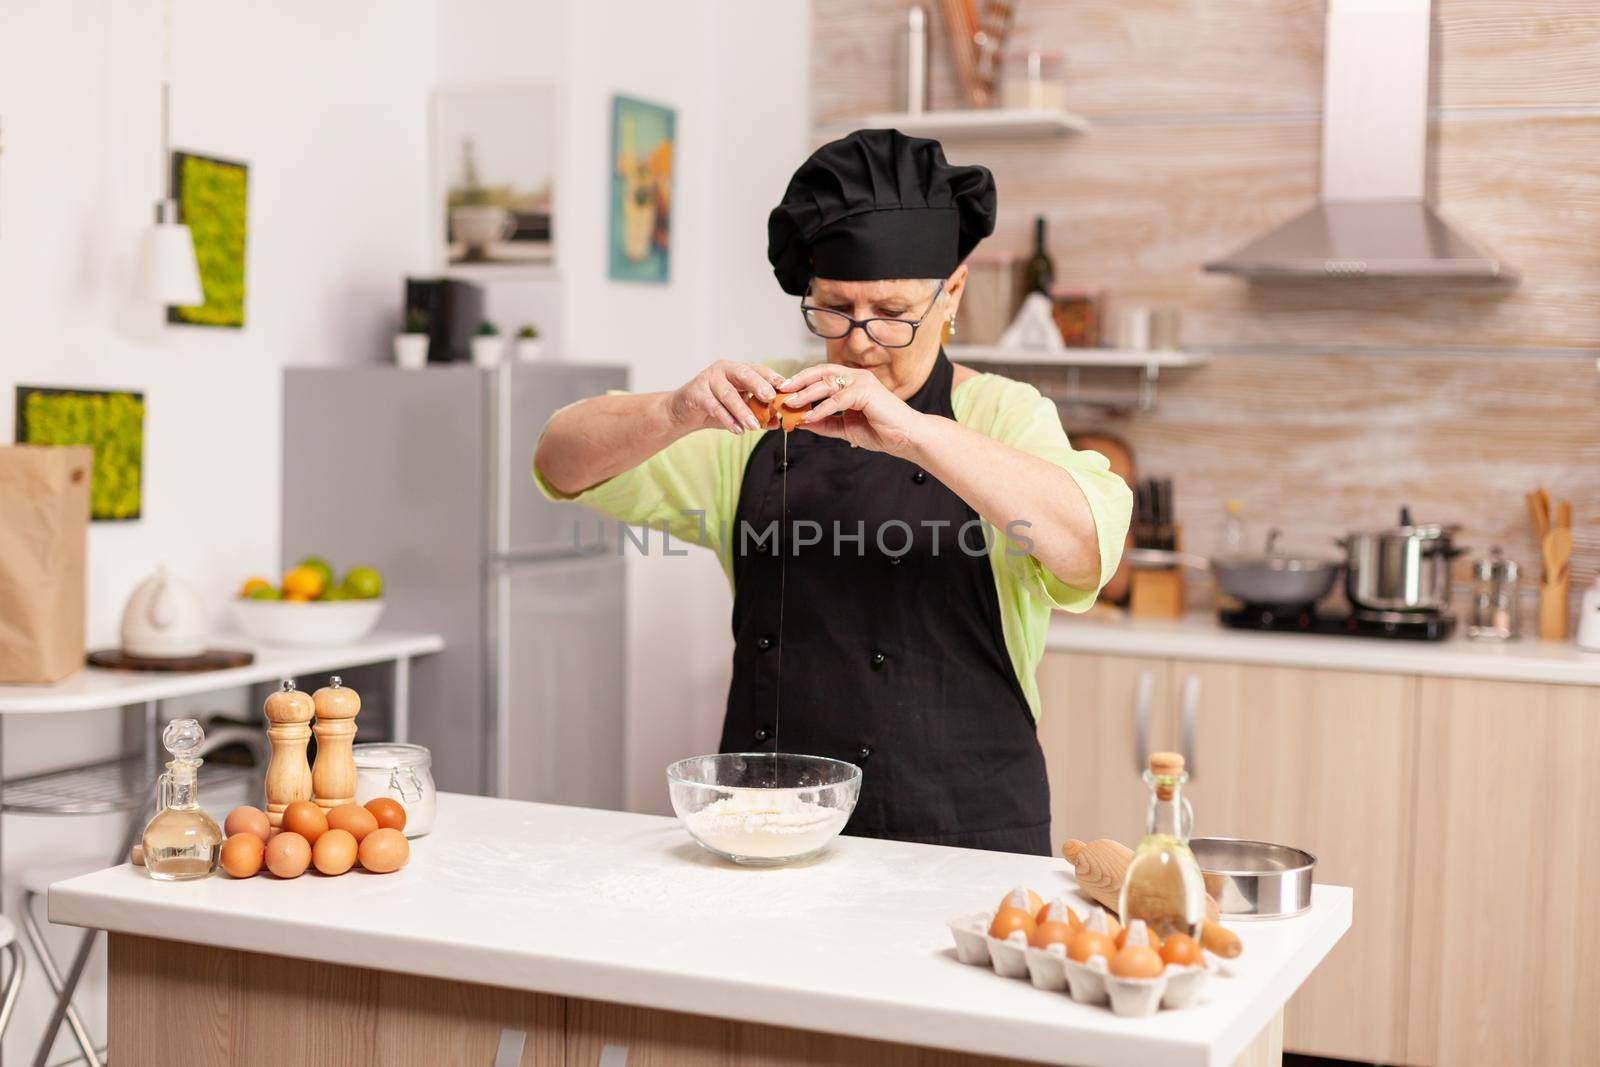 A woman prepares a dough for baking by DCStudio